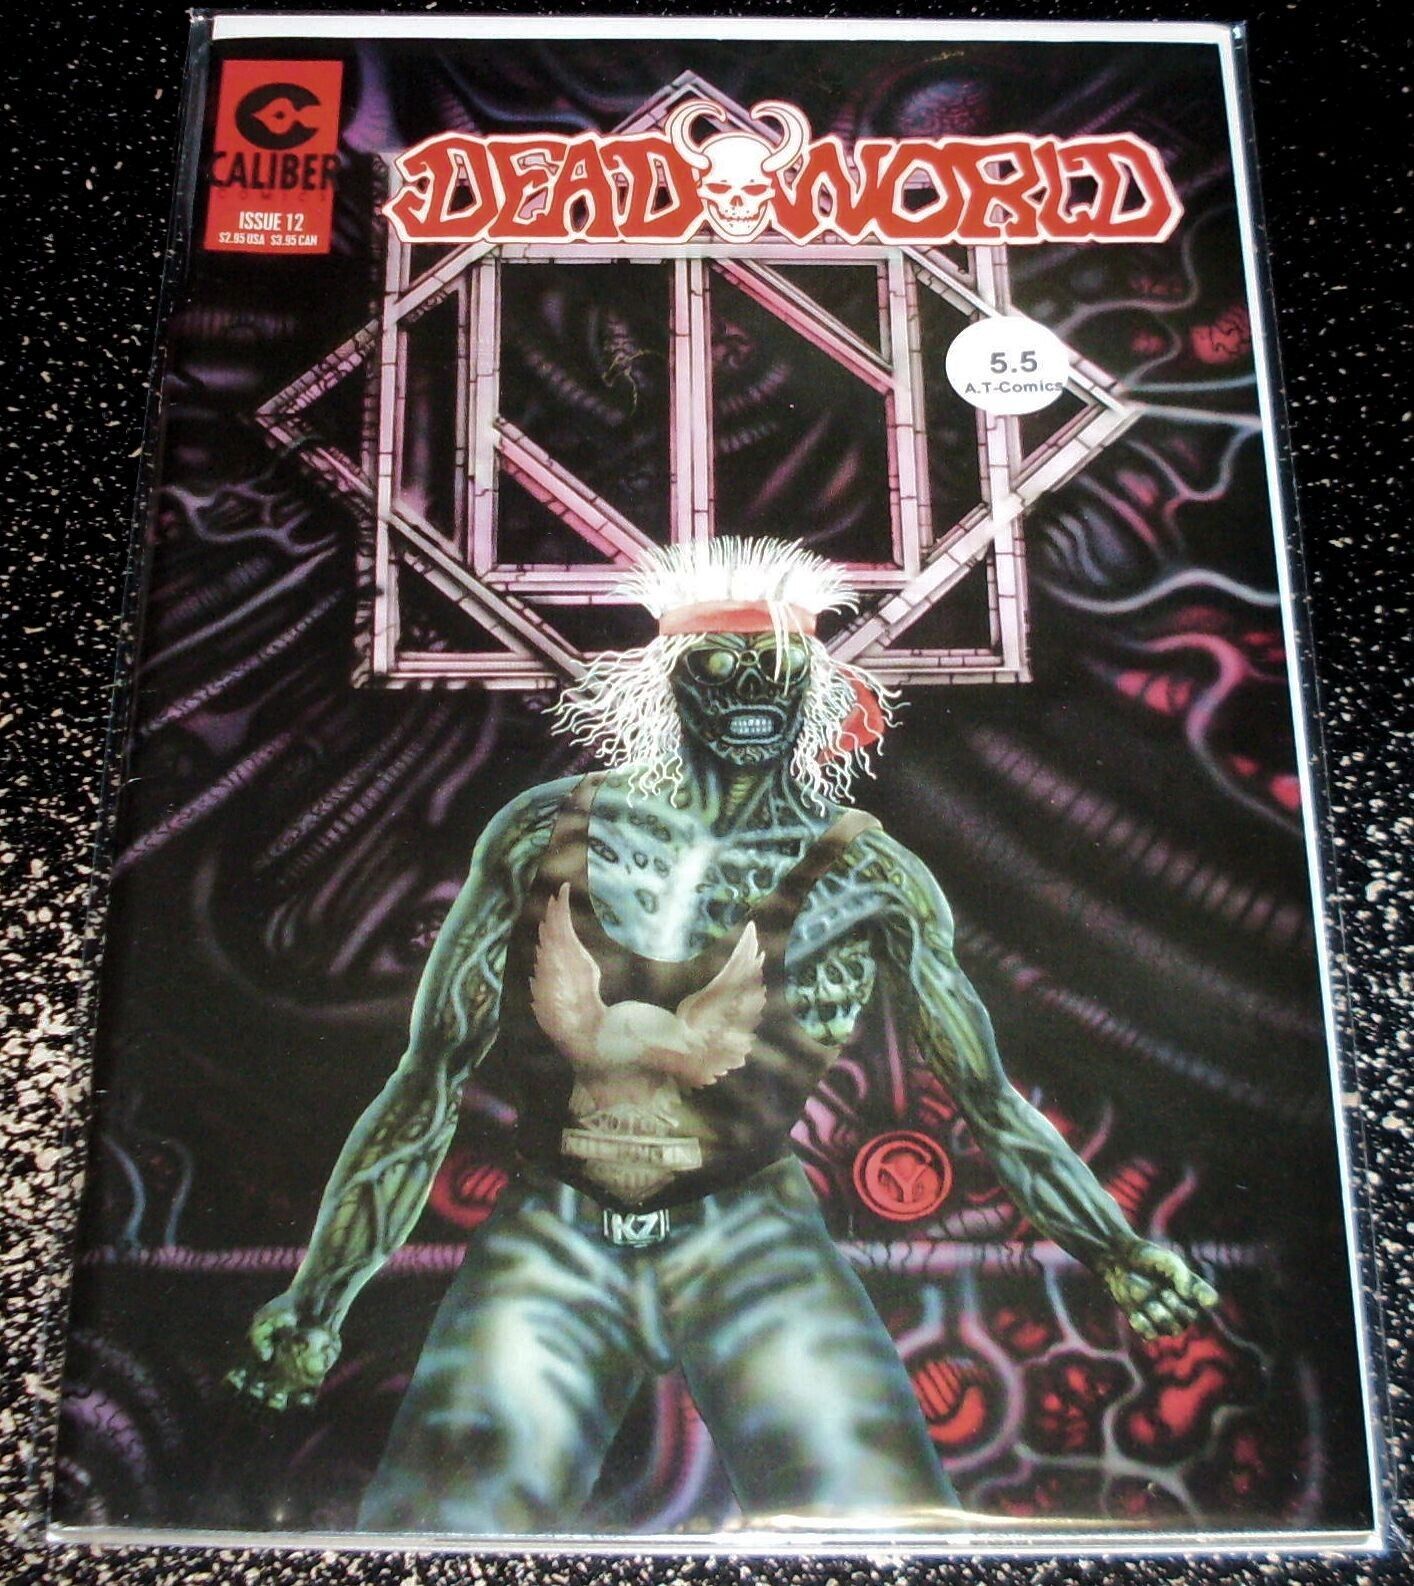 DeadWorld 12/Realm 9 (5.5) 1st Print 1994 Caliber Comics - Flat Rate Shipping